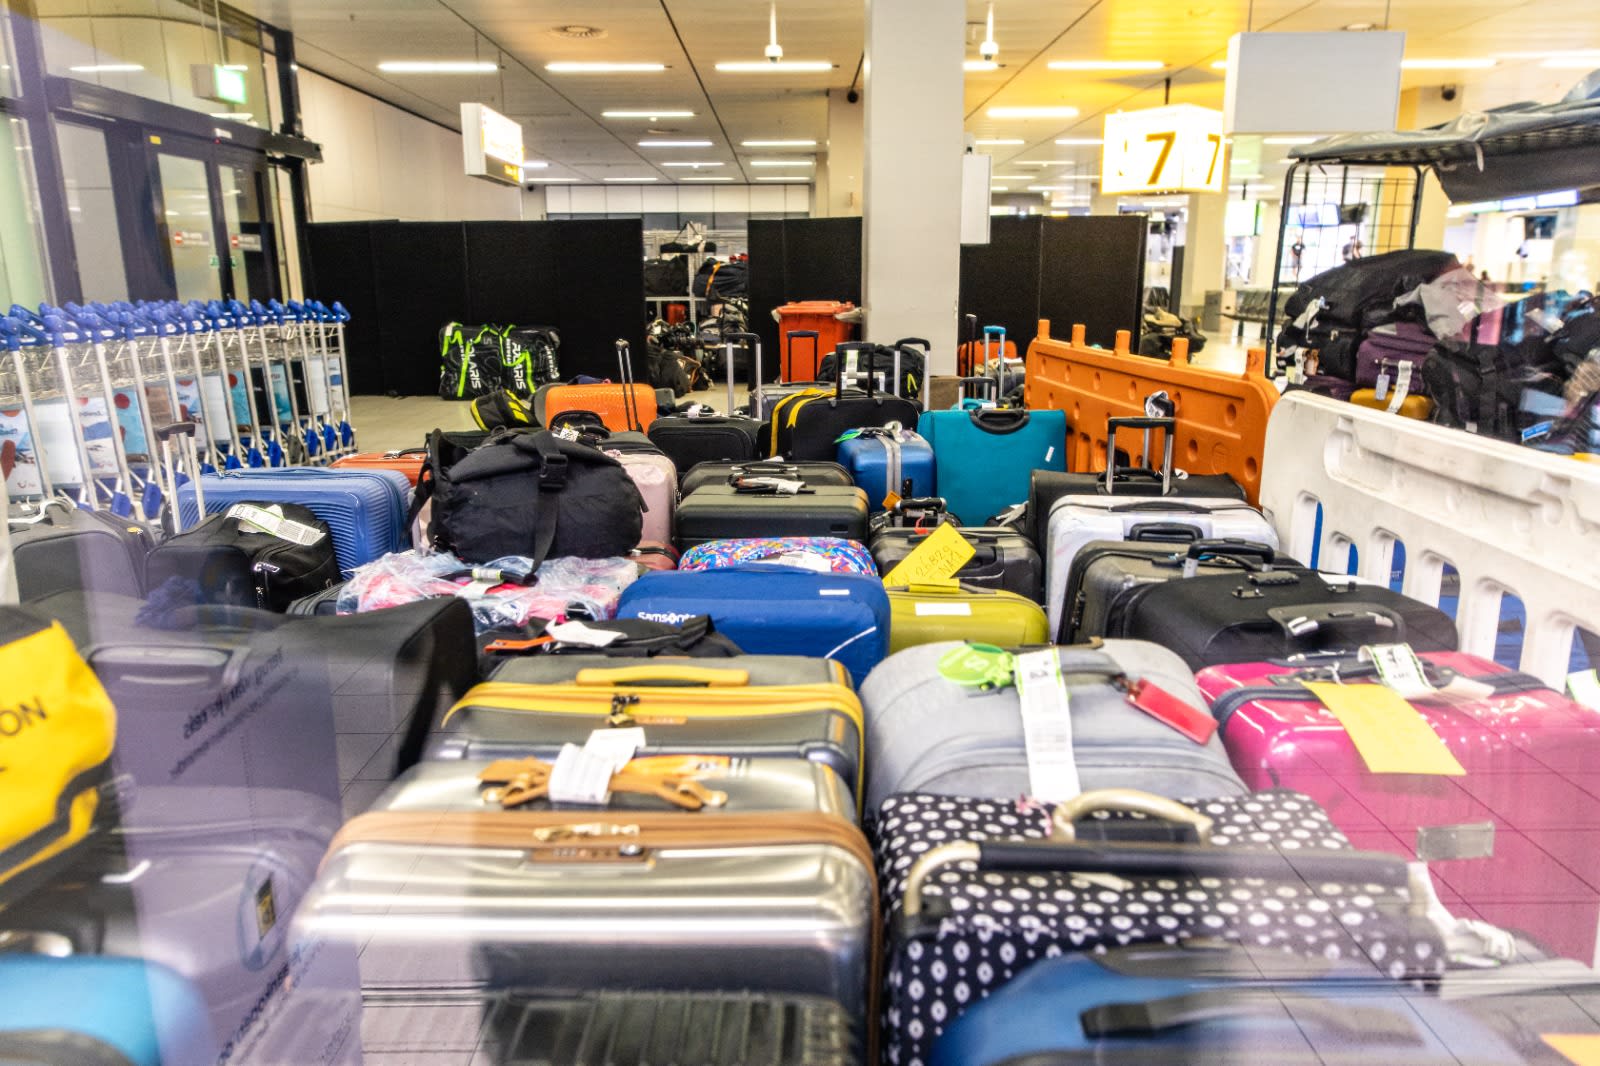 Problemen Schiphol stapelen zich op: duizenden achtergebleven koffers verstikken luchthaven